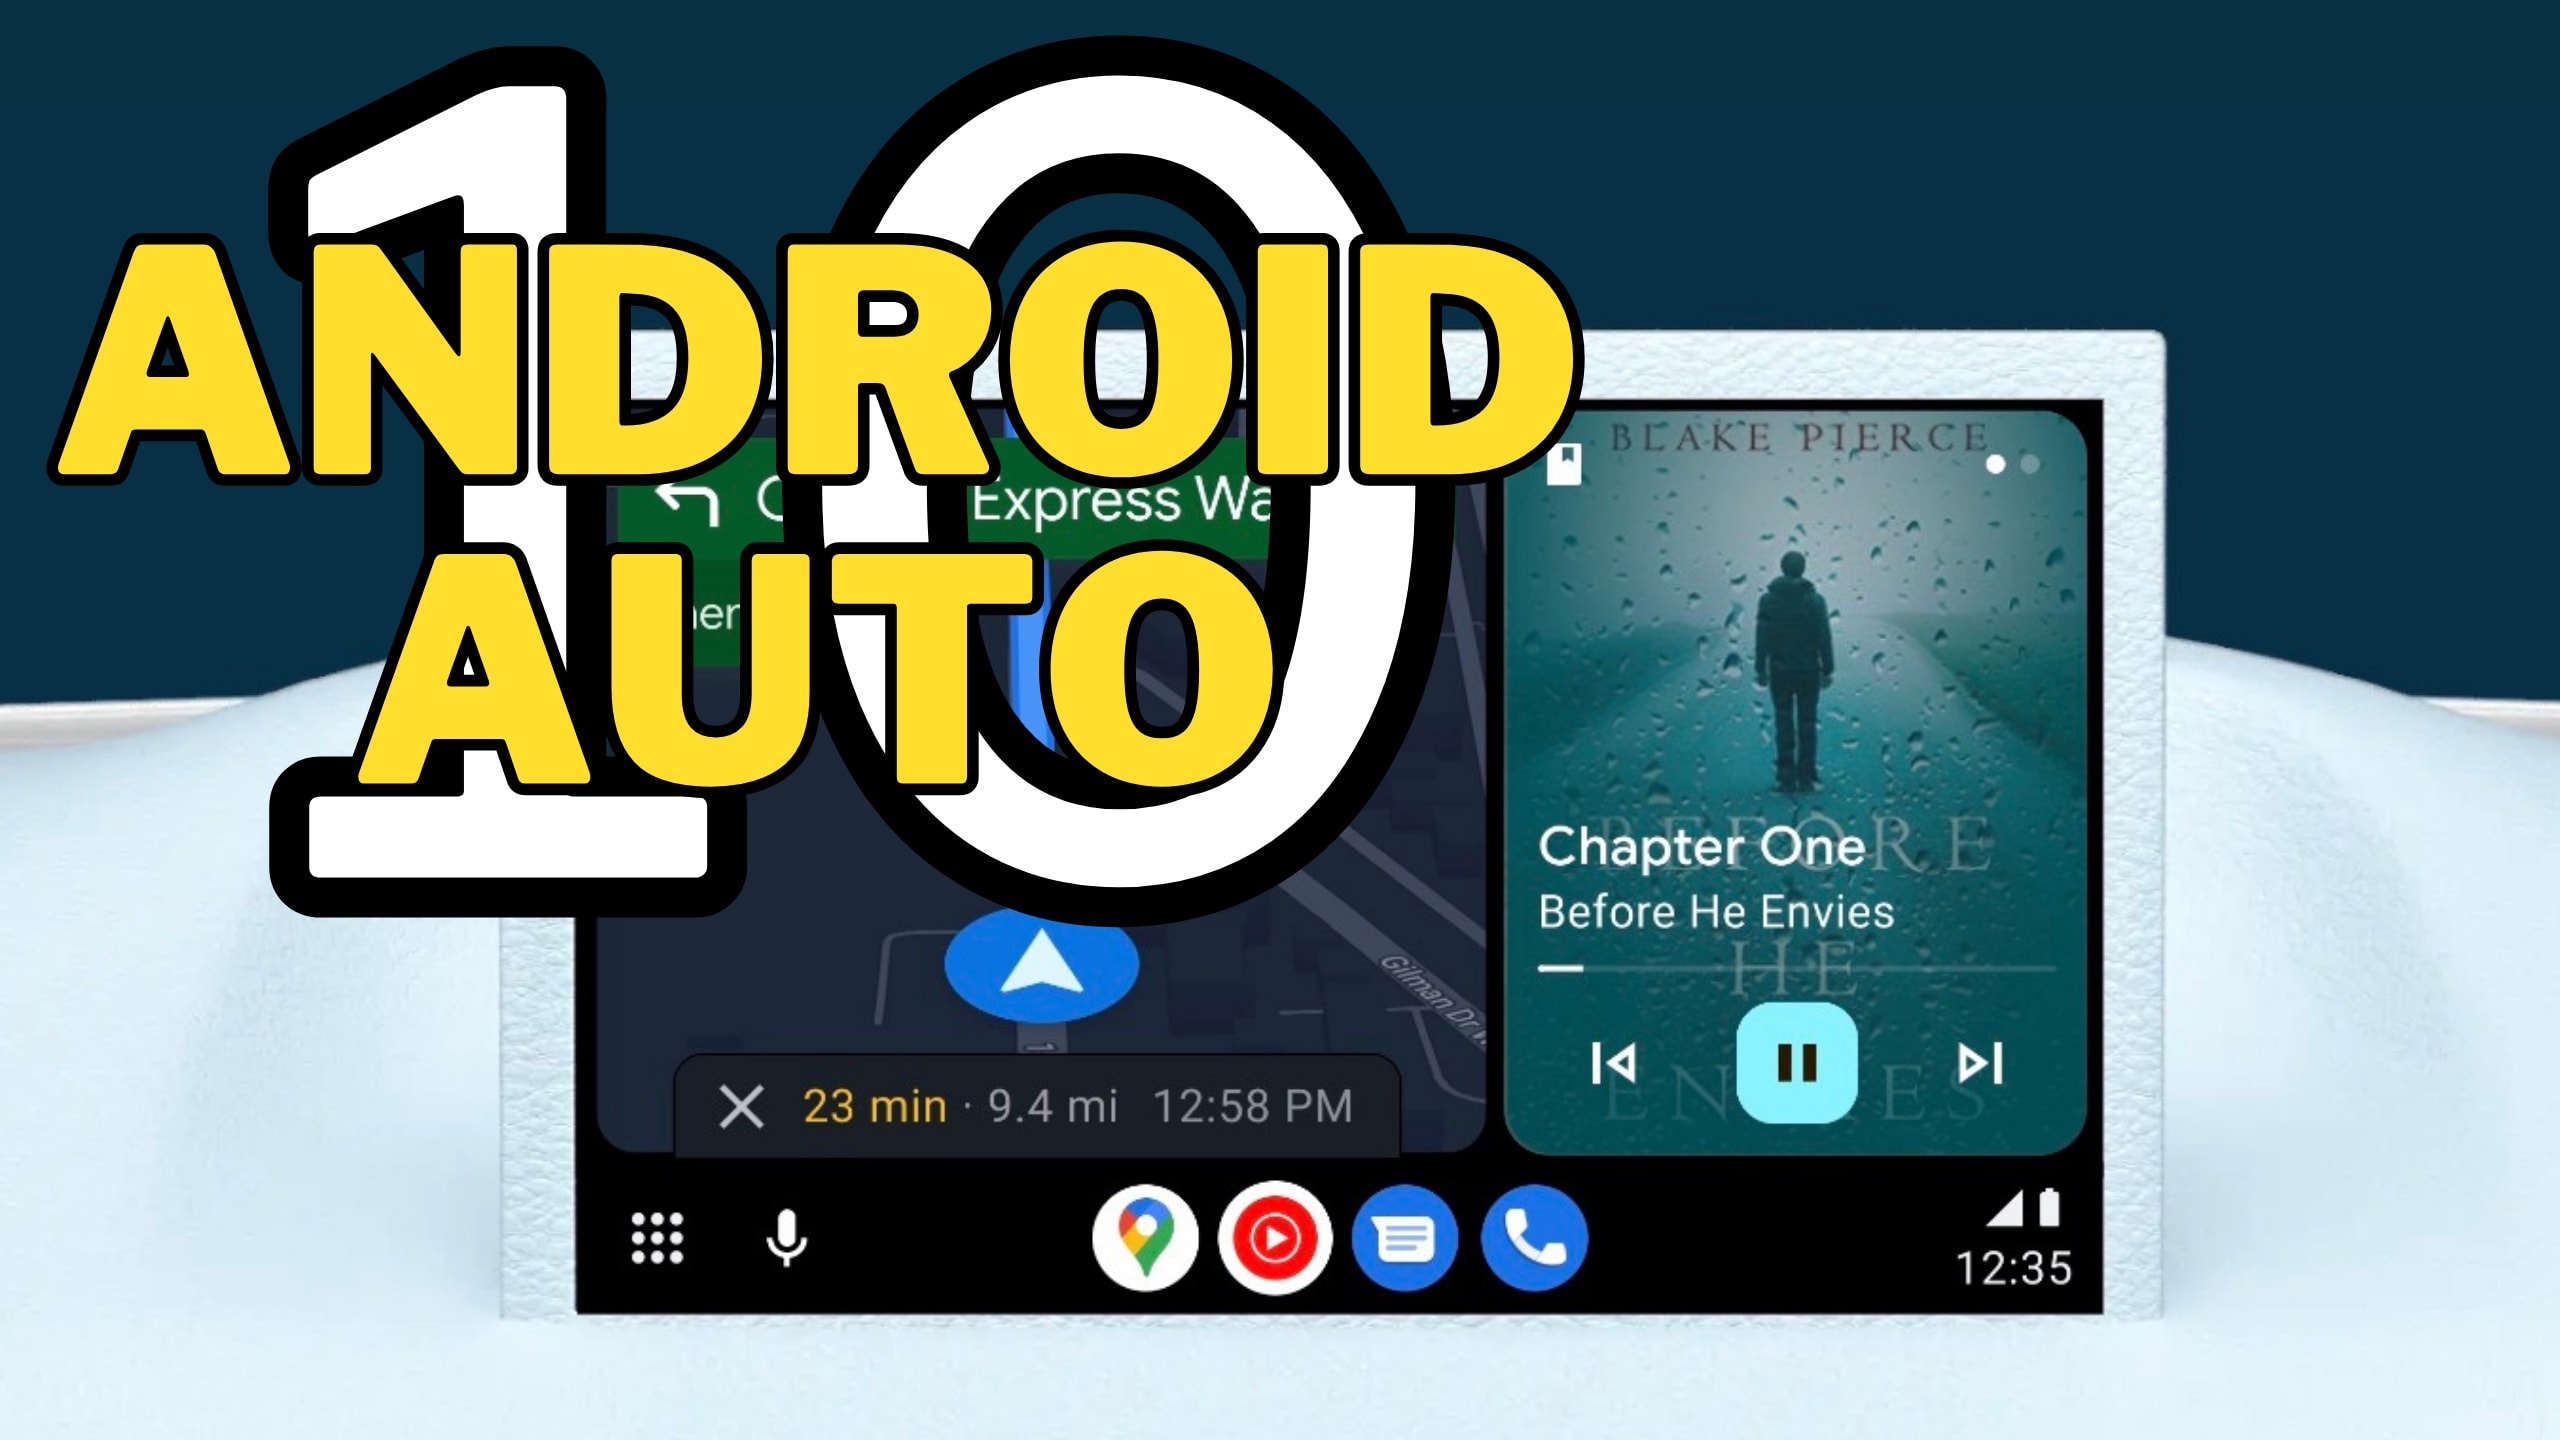 Android İndirme için Sum 41 Top Lyrics APK